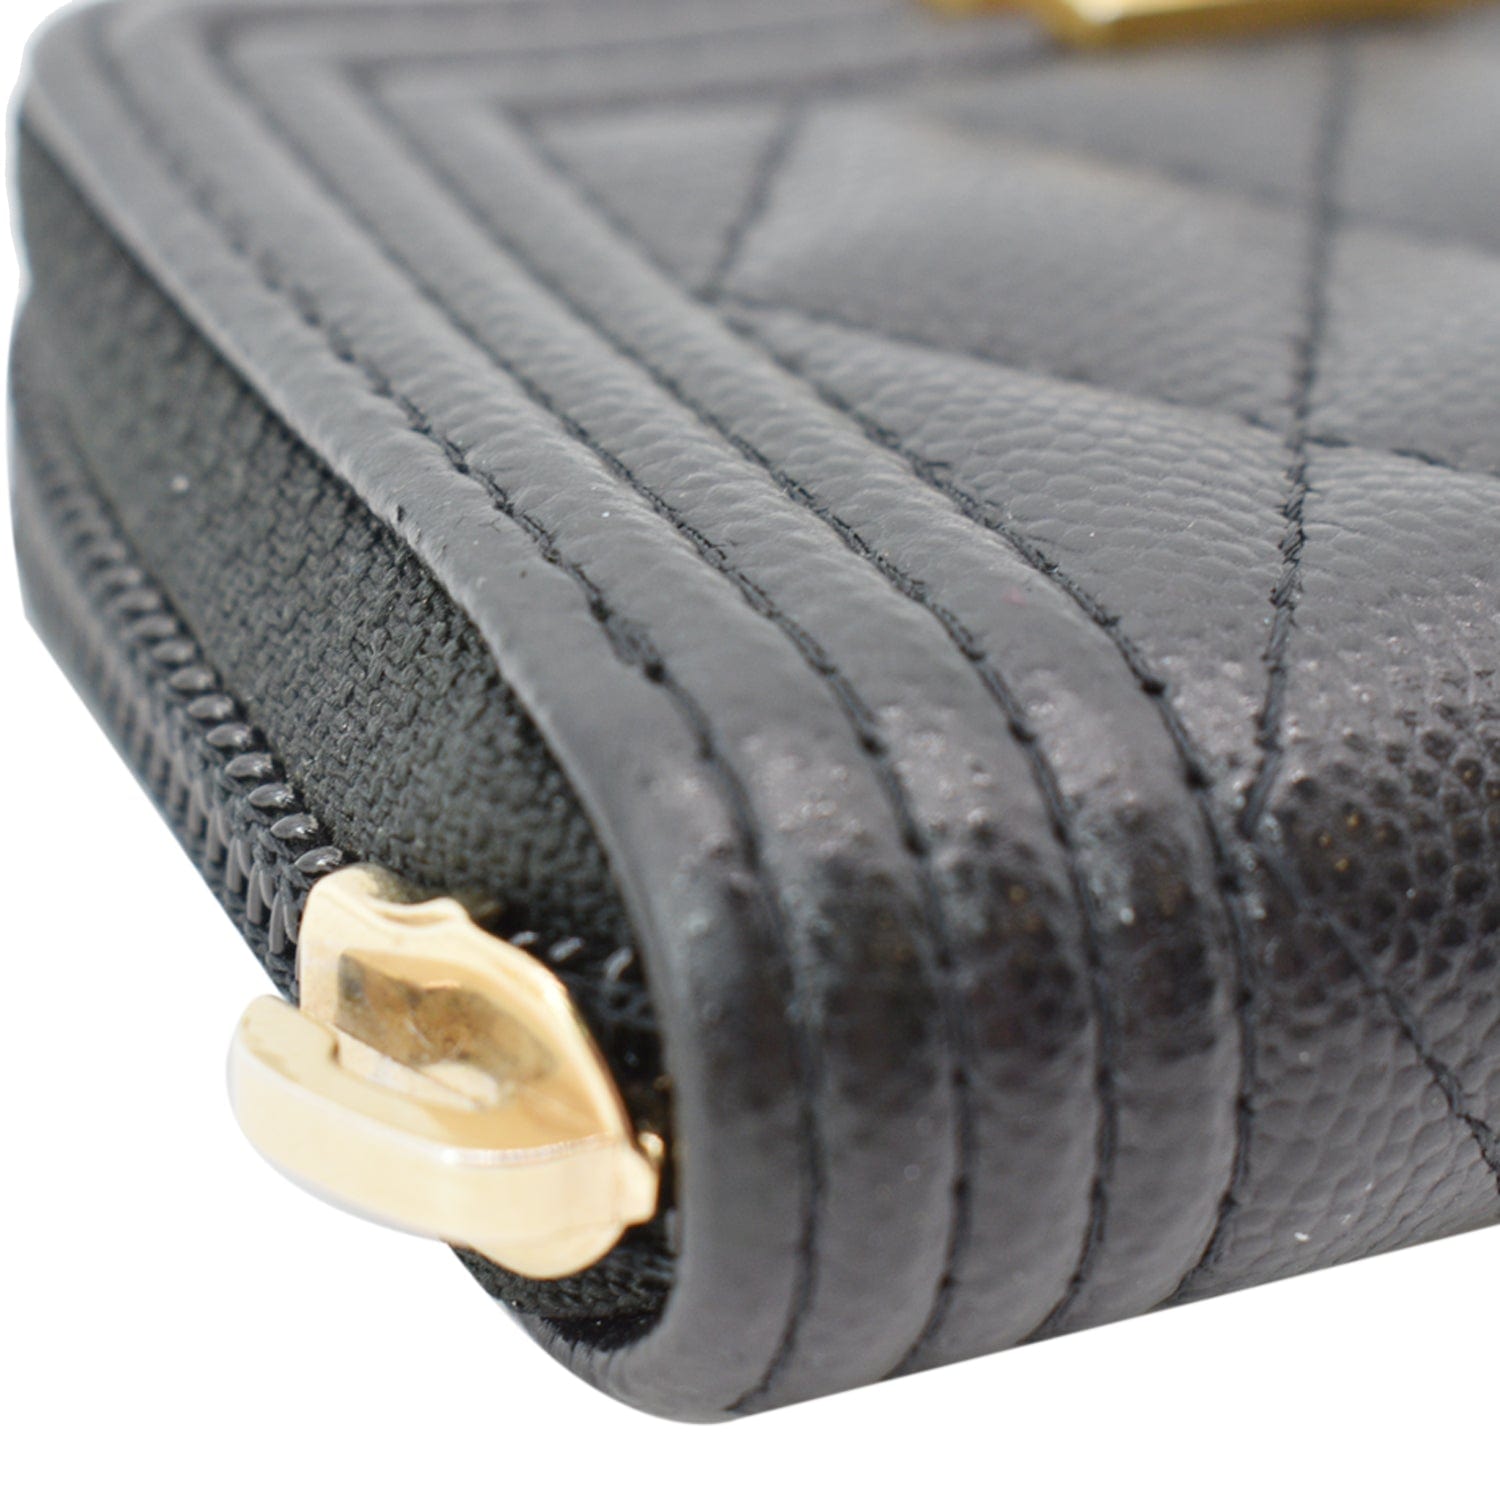 Chanel Black Caviar Leather Quilted Flap Envelope Gold Hardware Wallets —  Labels Resale Boutique